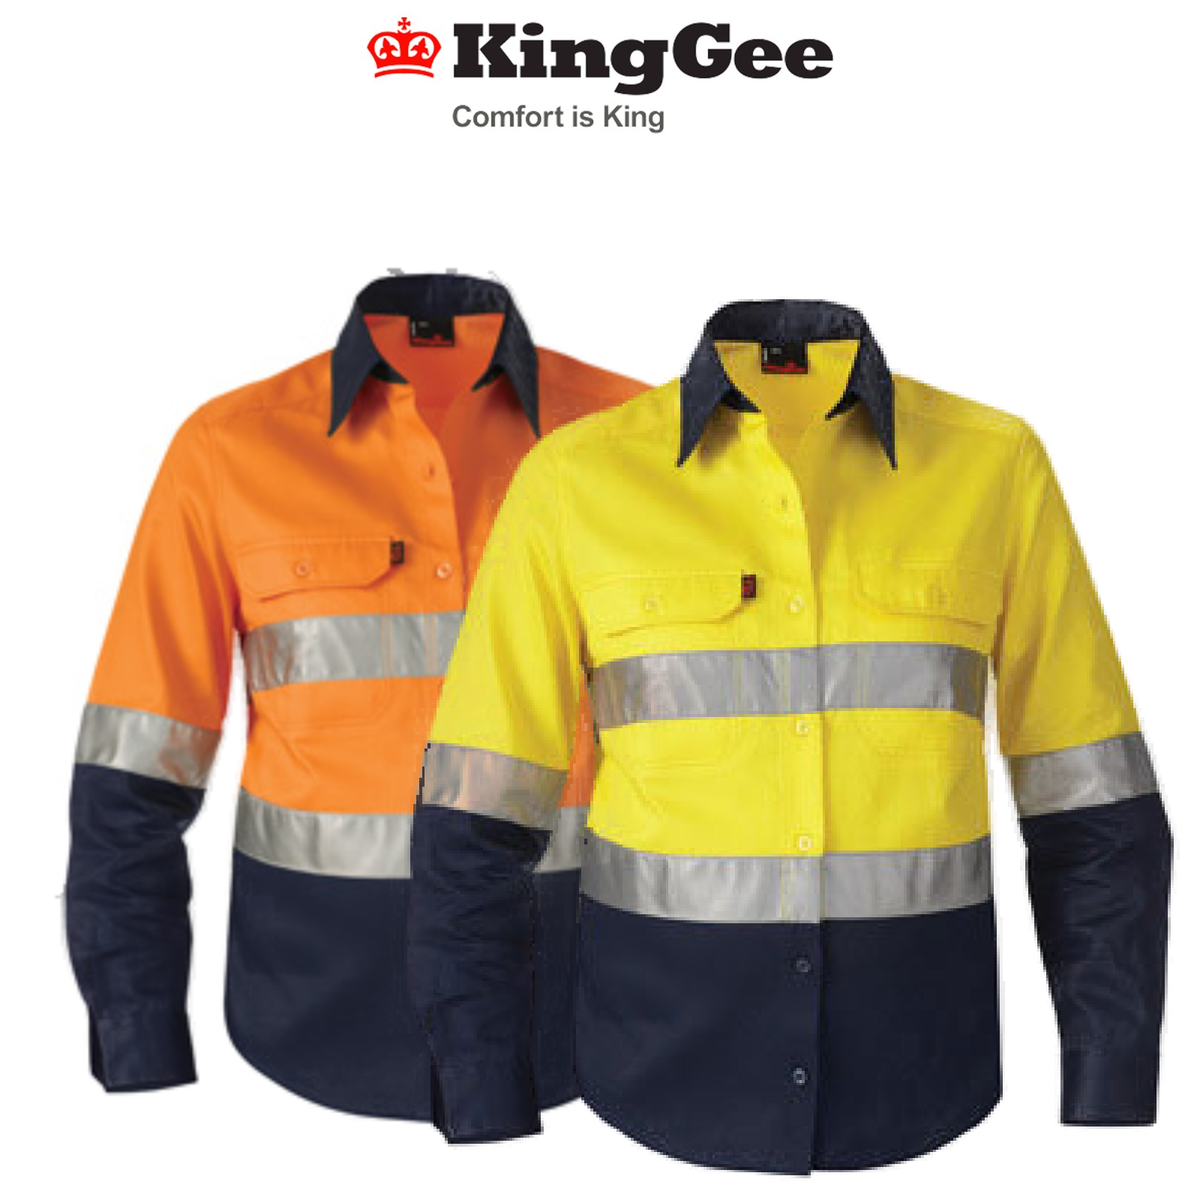 KingGee Womens Hi-Vis Cotton Drill Shirt L/S Reflective Tape Work Safety K44532